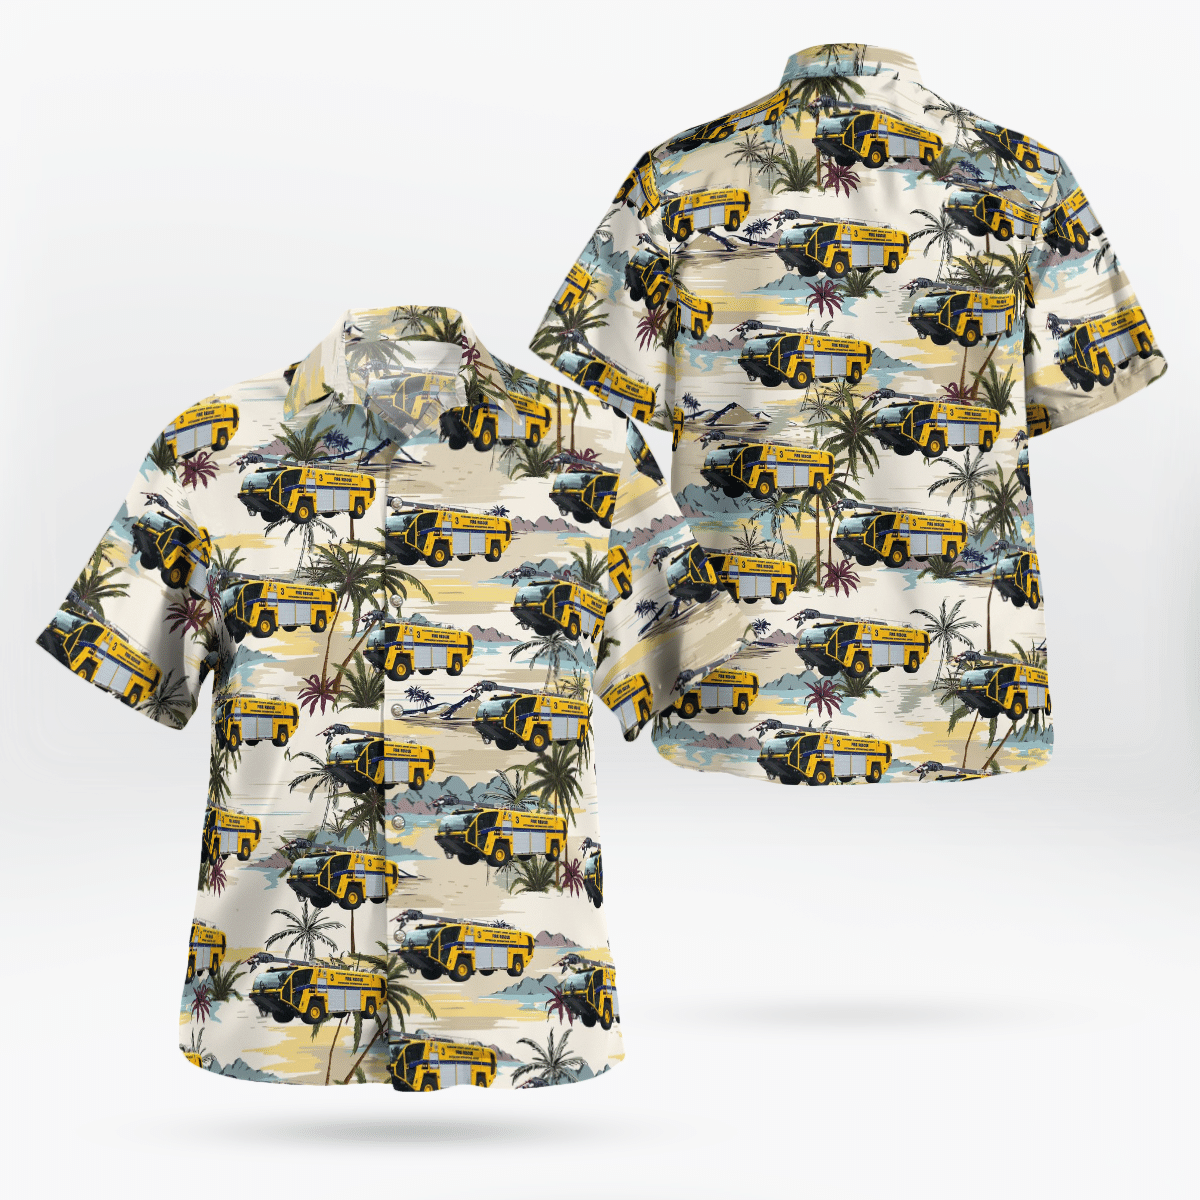 Listed below are some High-quality Aloha Shirt 429